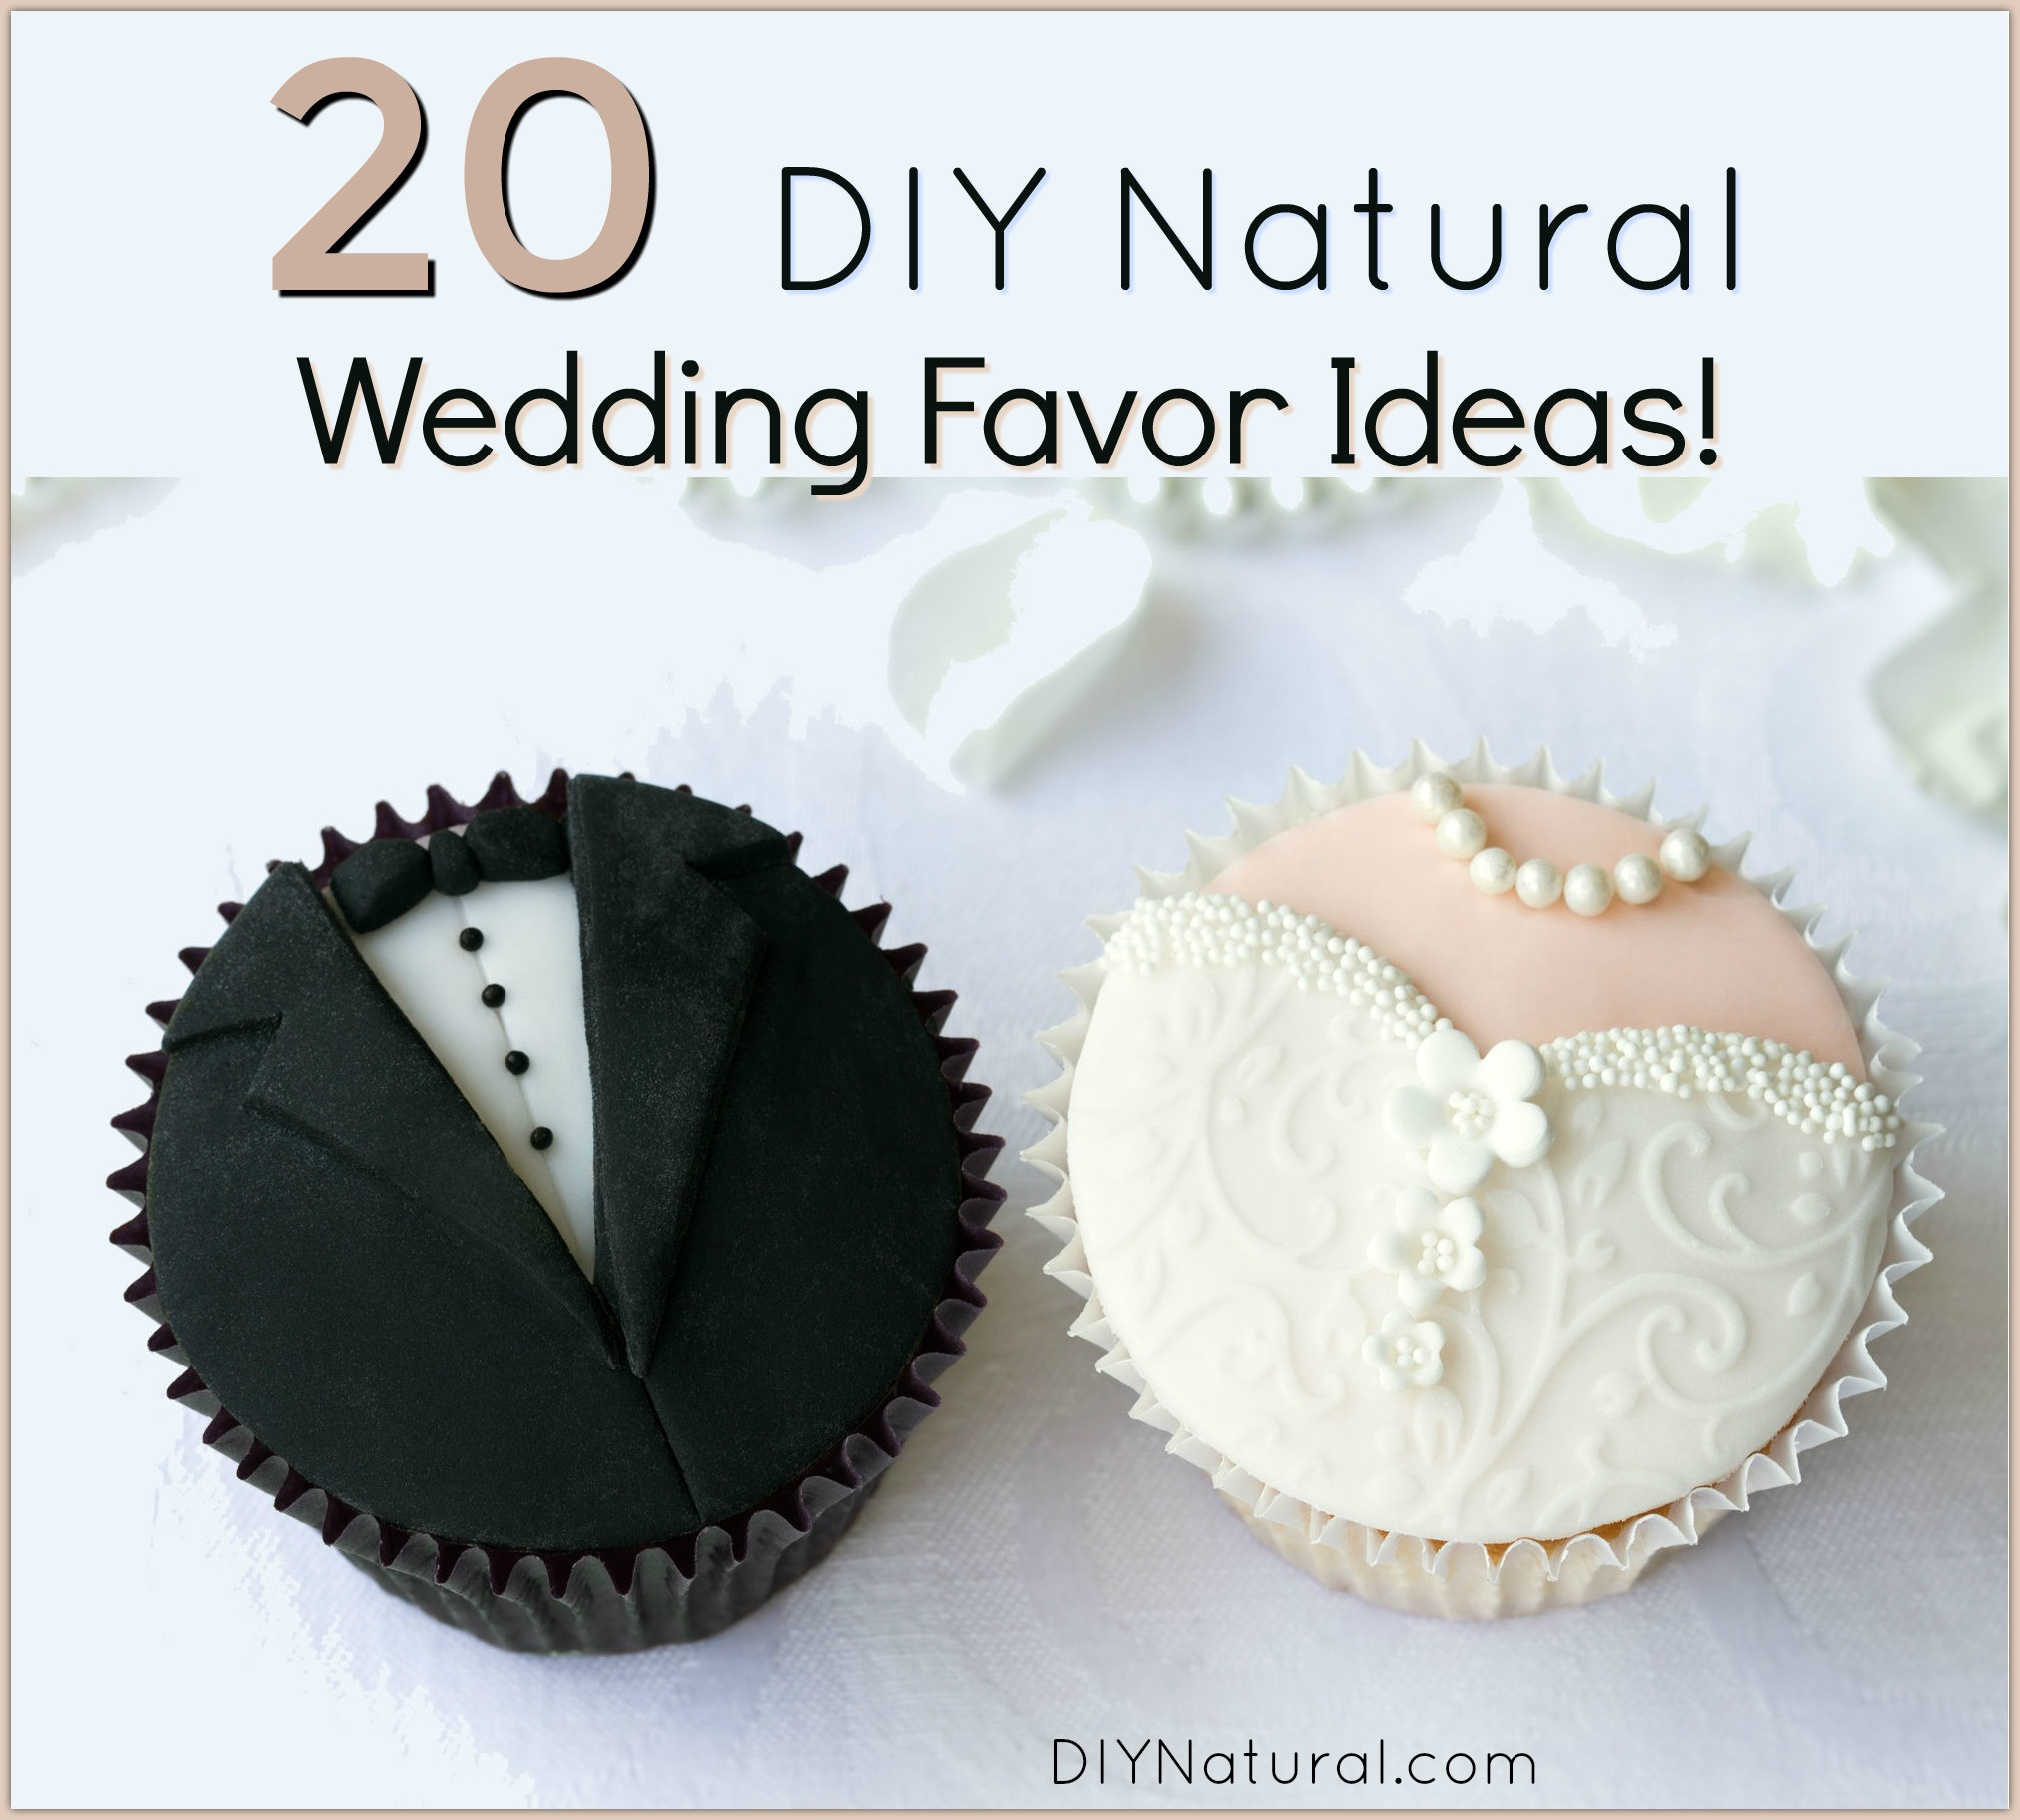 Best ideas about DIY Wedding Favour Ideas
. Save or Pin DIY Wedding Favors 20 Ideas for Amazing Natural Wedding Now.